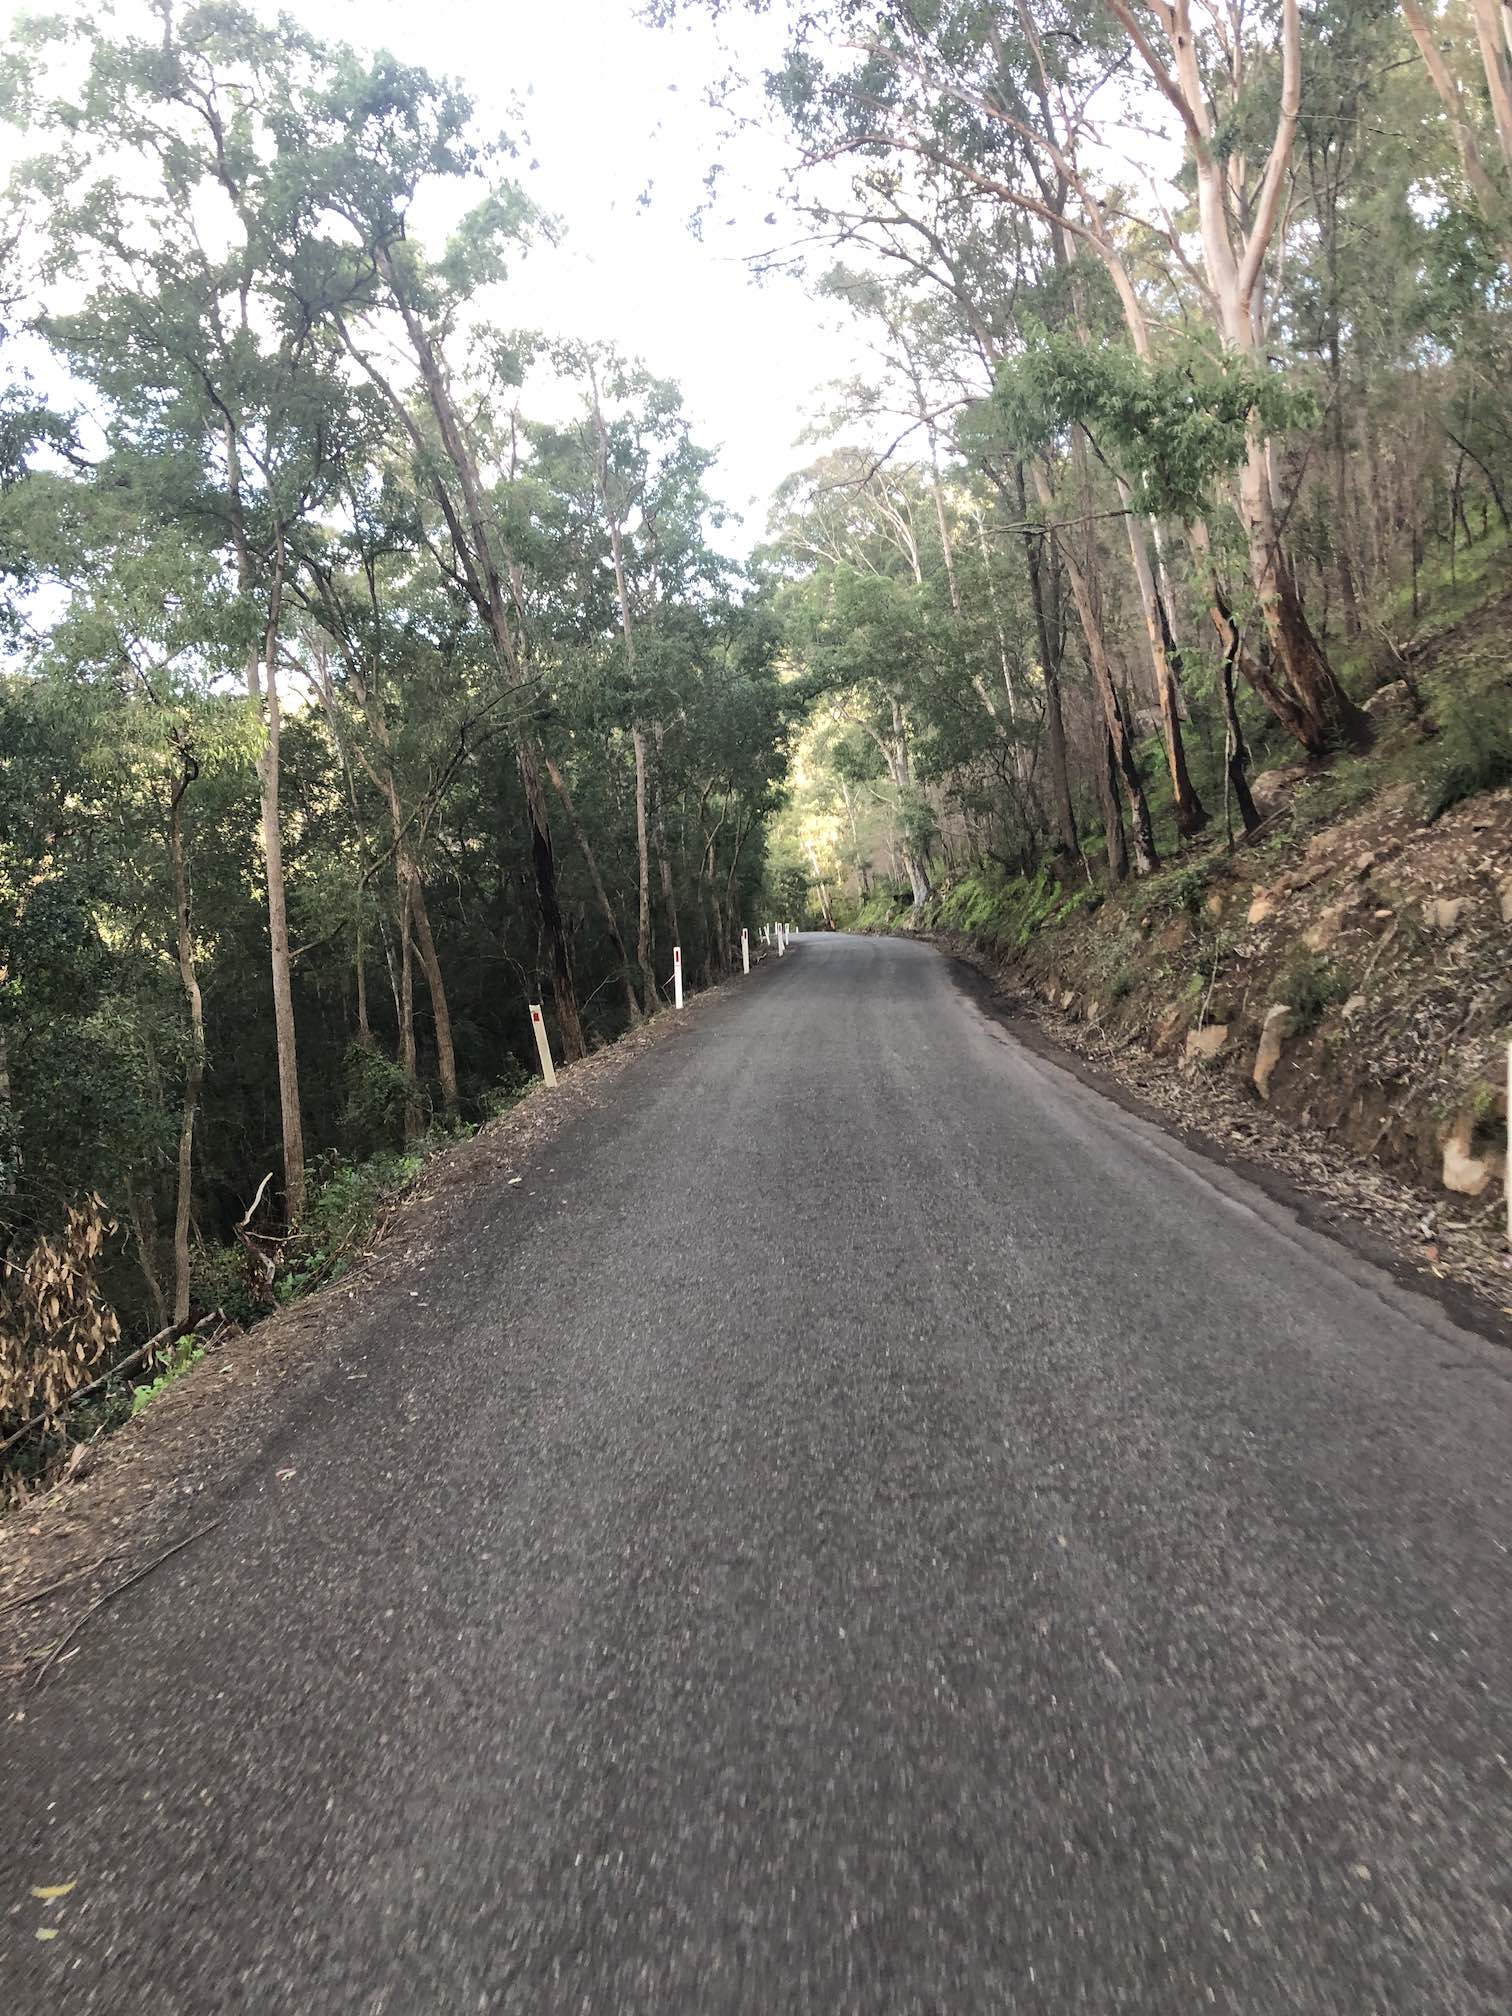 Narrow road winding through Australian bush.